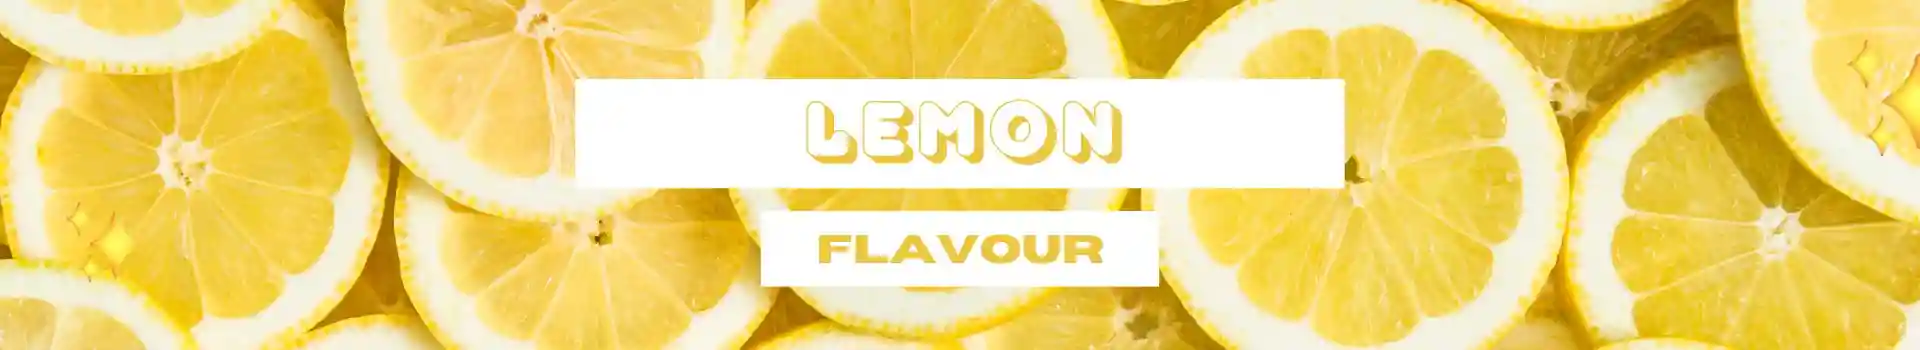 IGET Vape Flavours - Lemon